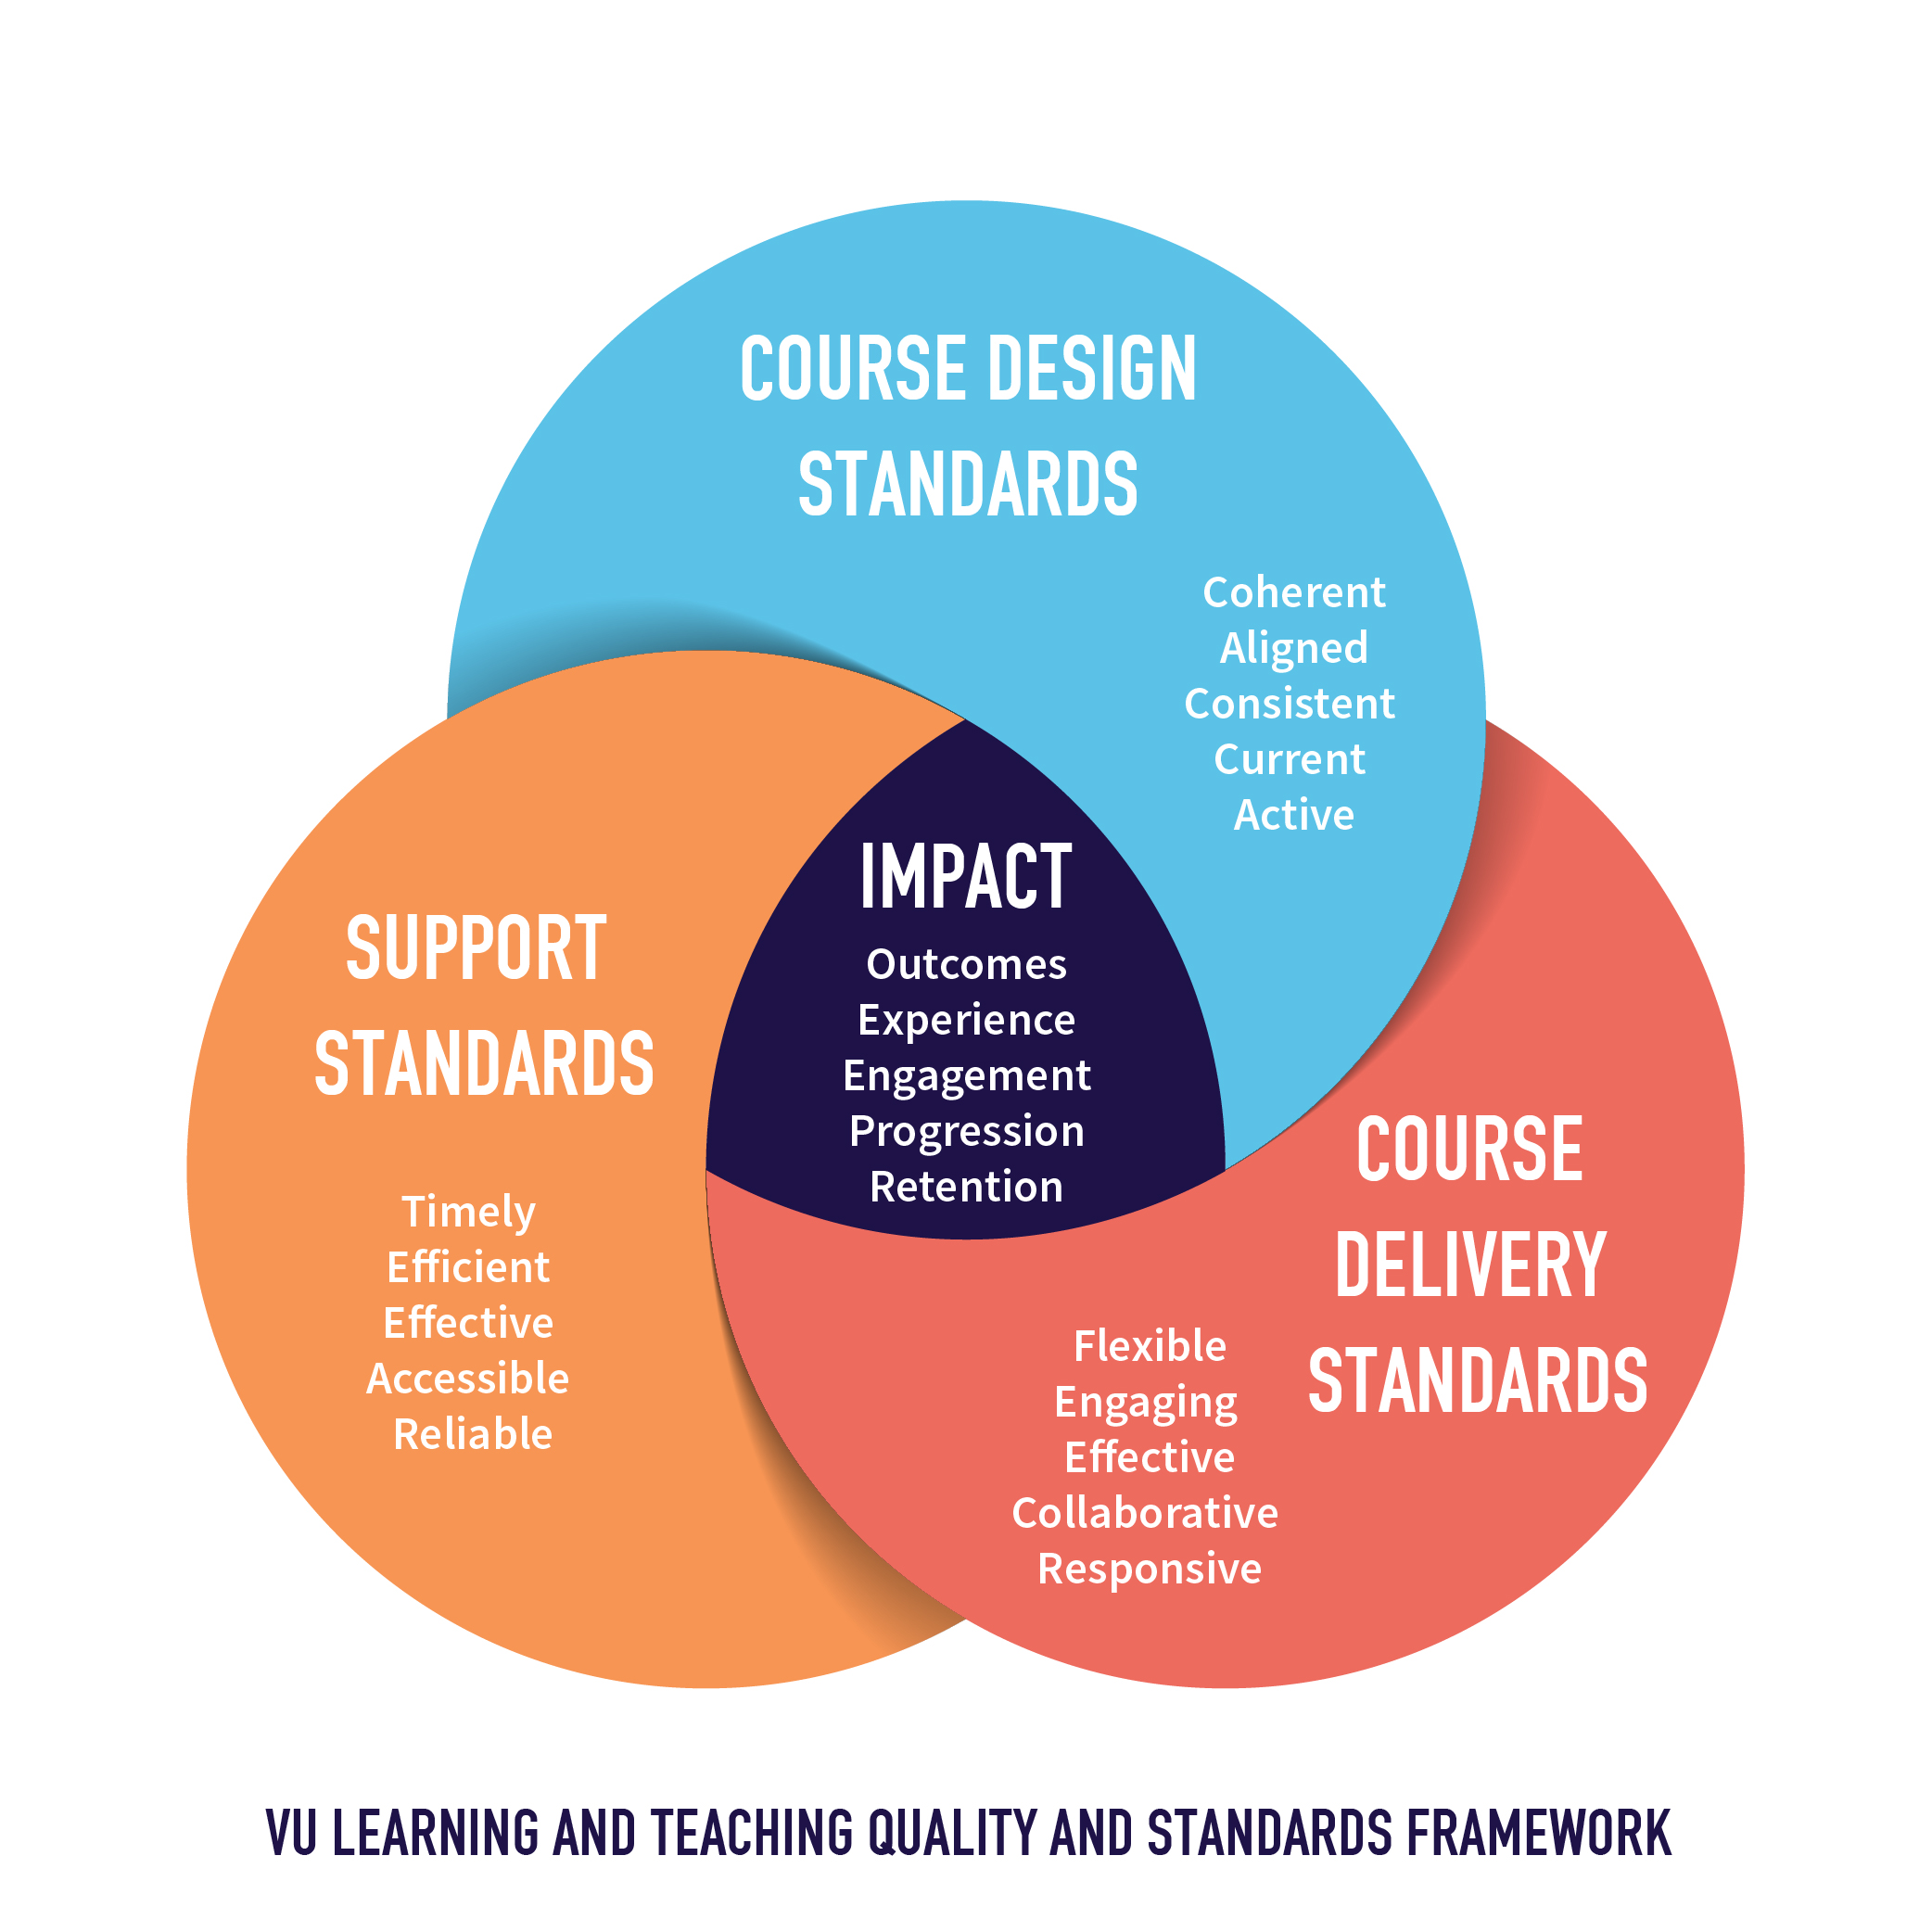 VU Quality & Standards Framework diagram. Text description provided under the 'Text description of the 'VU Learning & Teaching Quality & Standards Framework' diagram' heading.